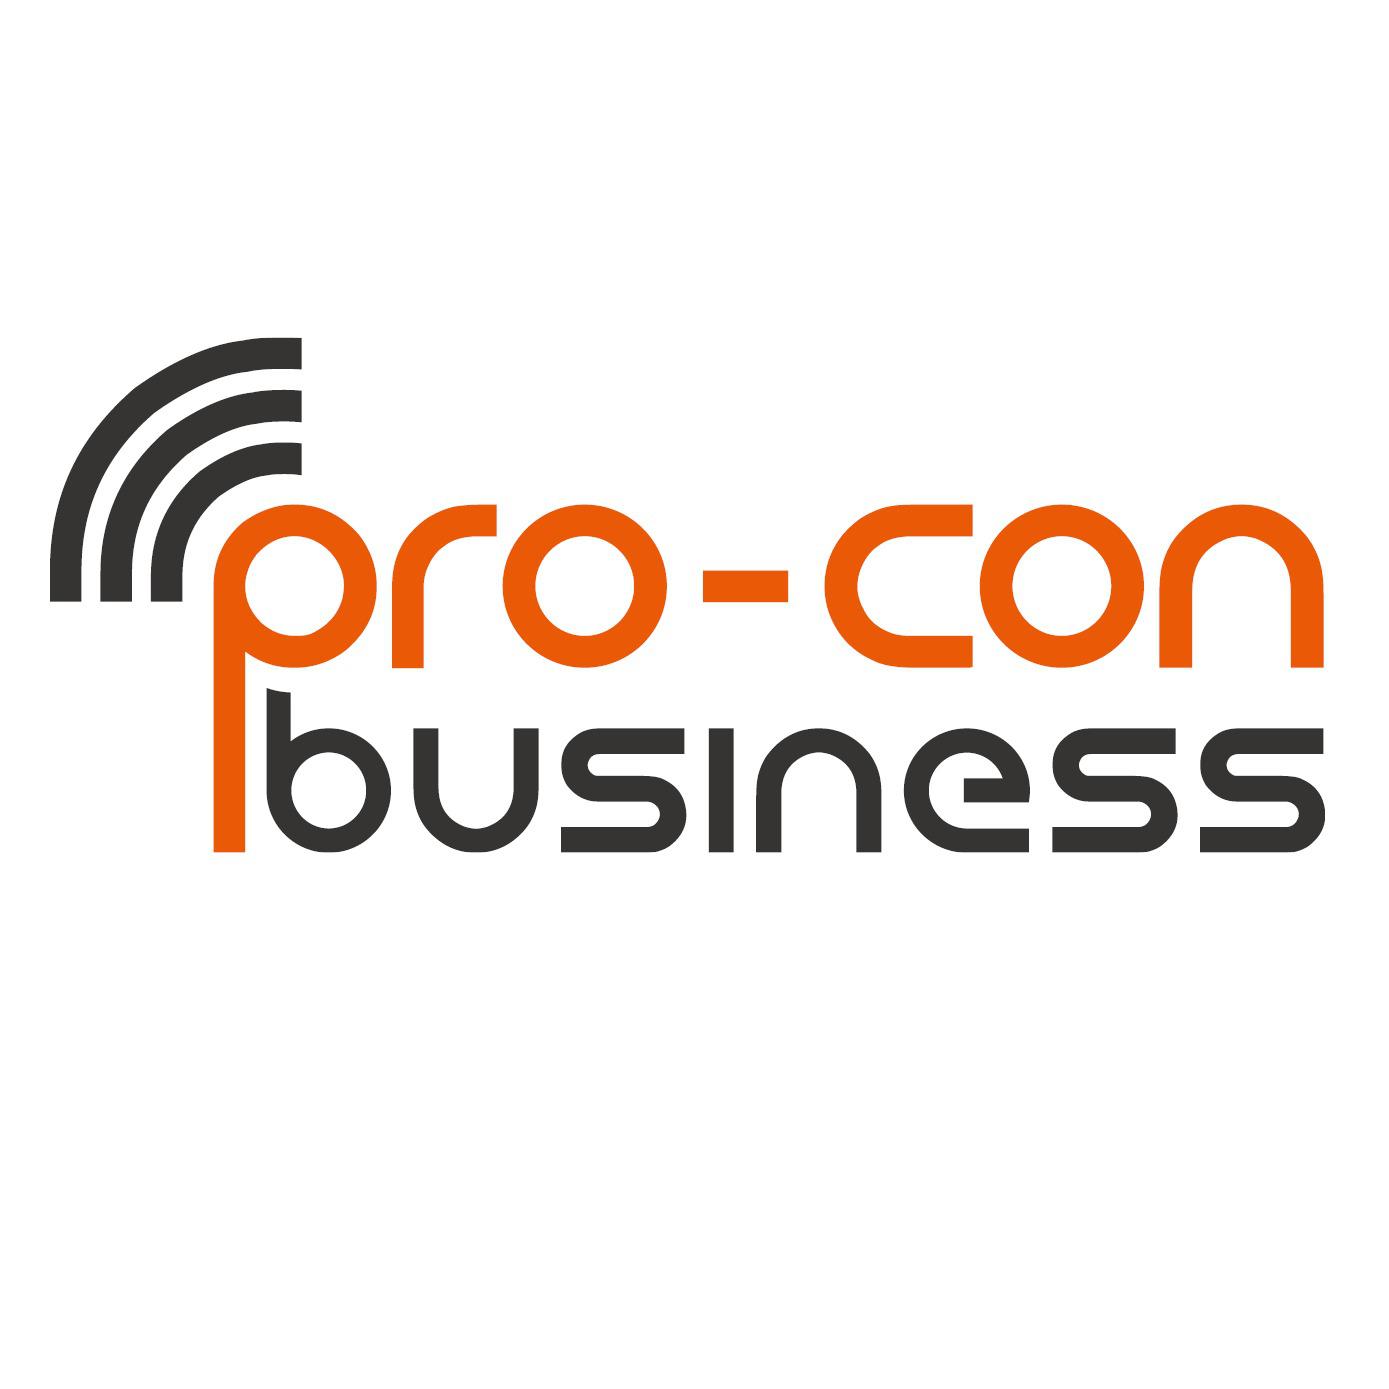 Kundenlogo pro-con business GmbH